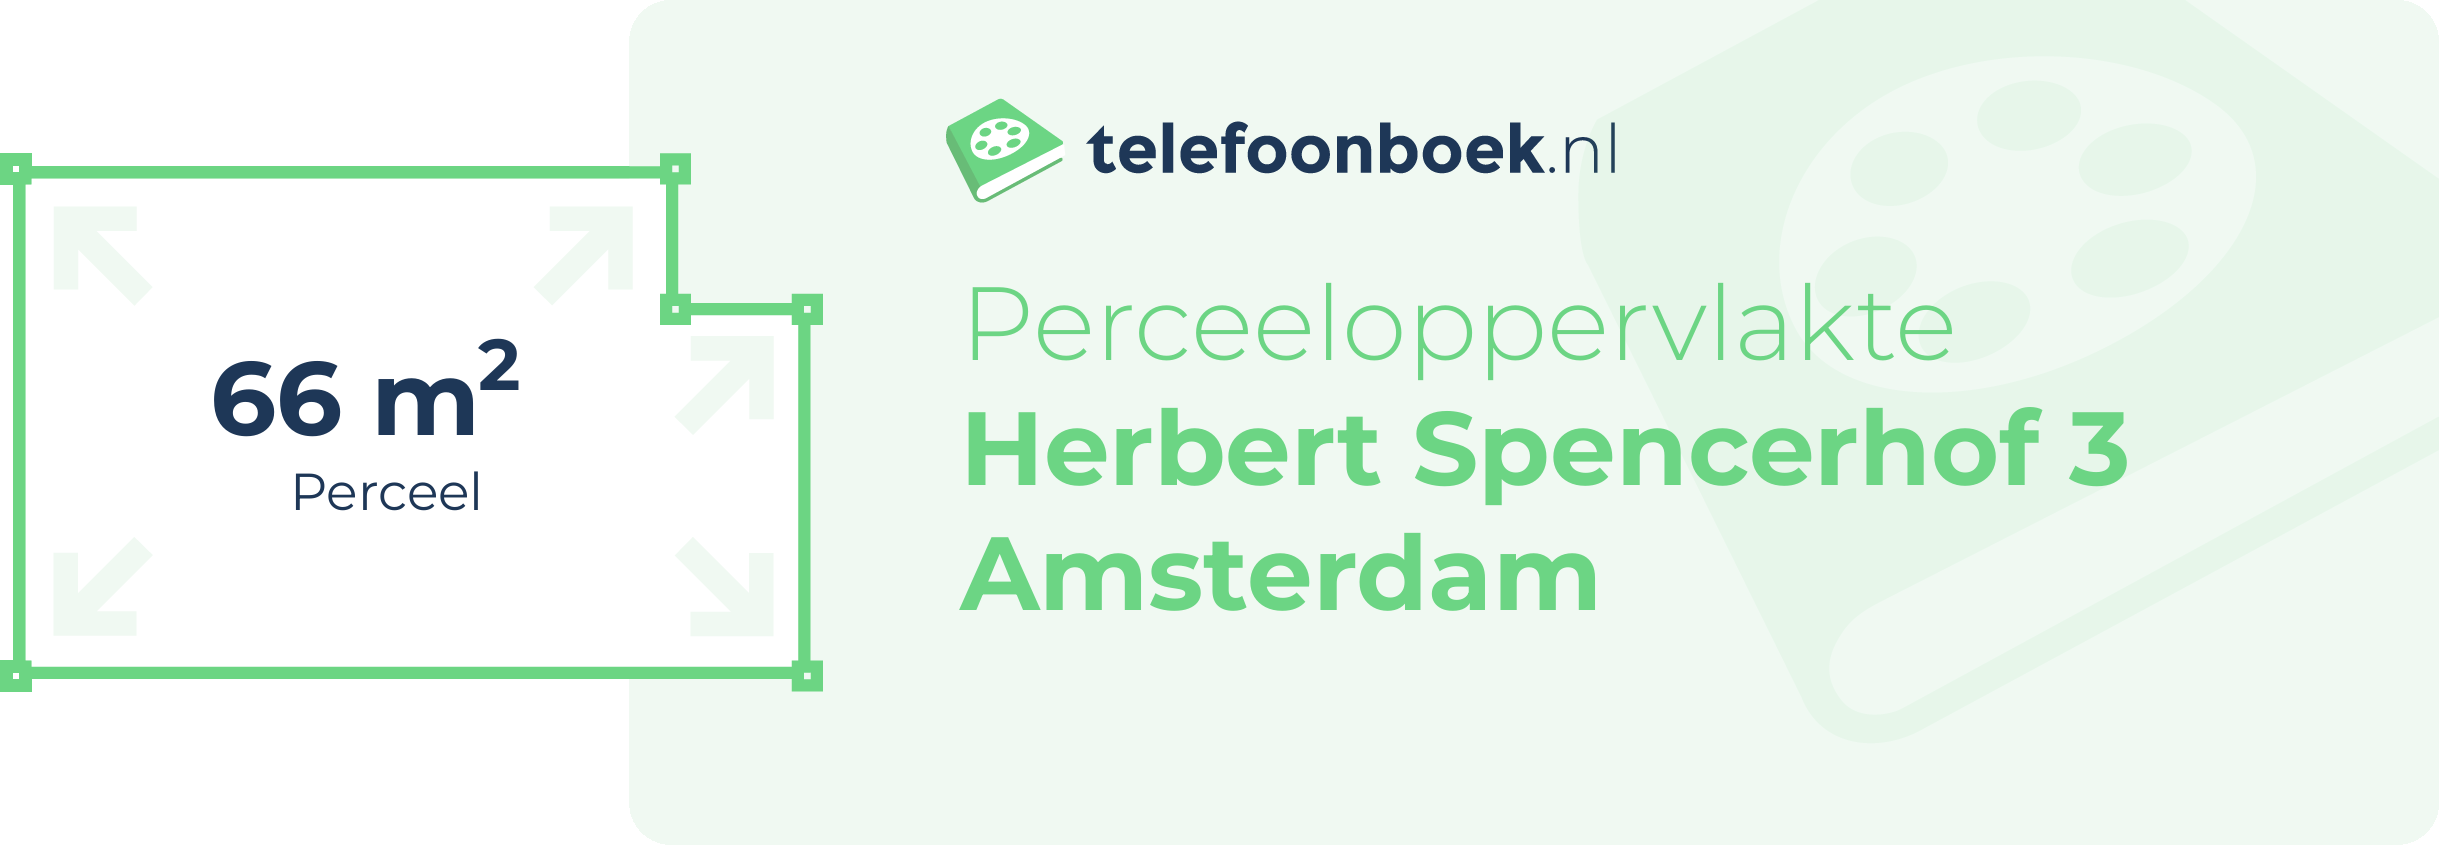 Perceeloppervlakte Herbert Spencerhof 3 Amsterdam